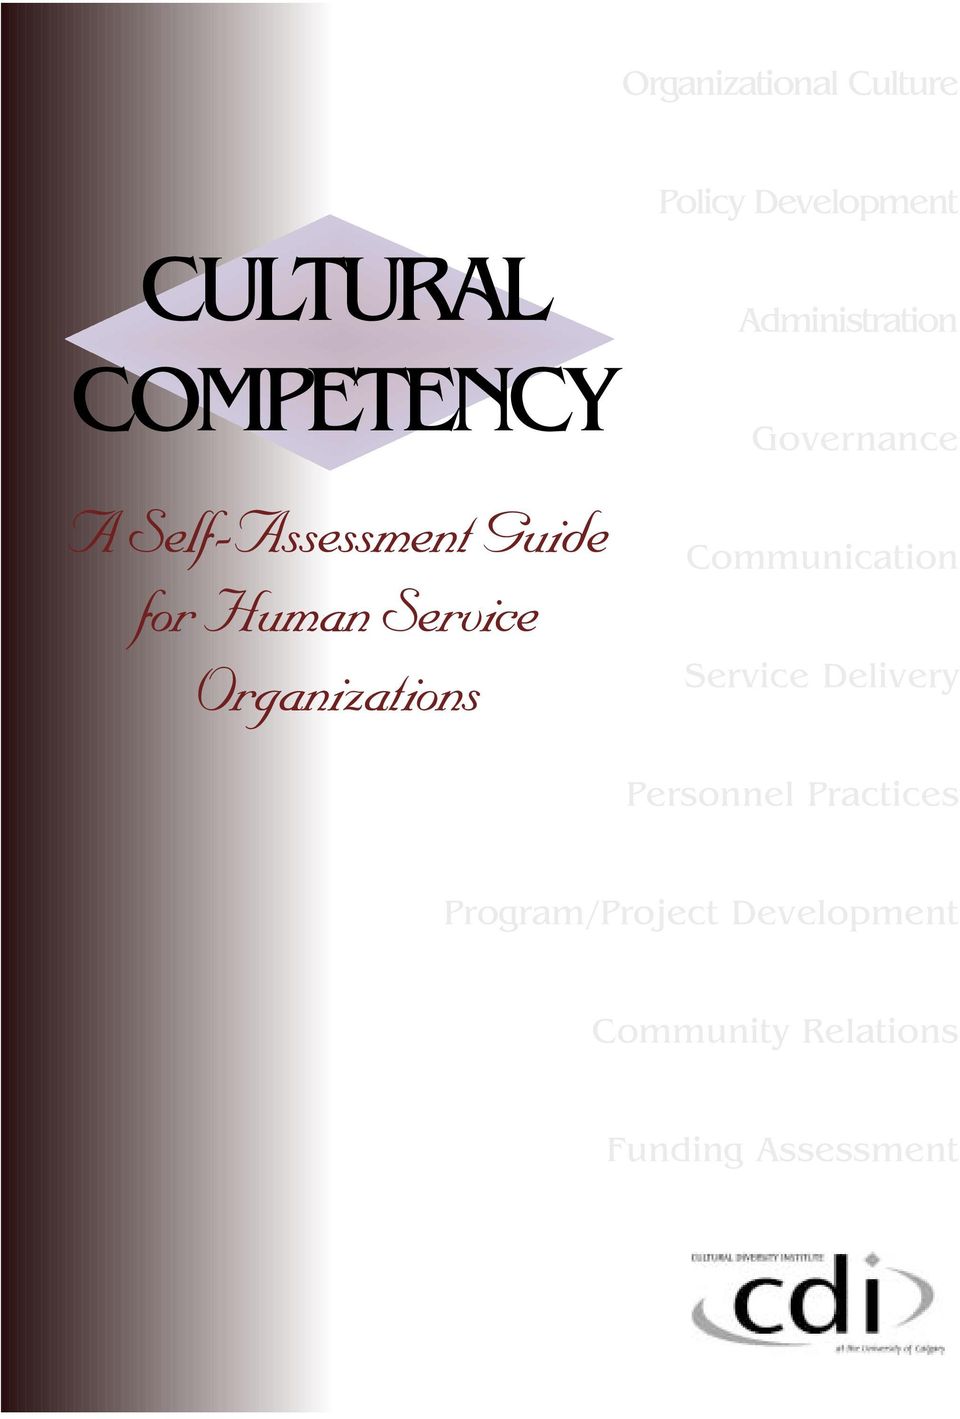 Administration Governance Communication Service Delivery